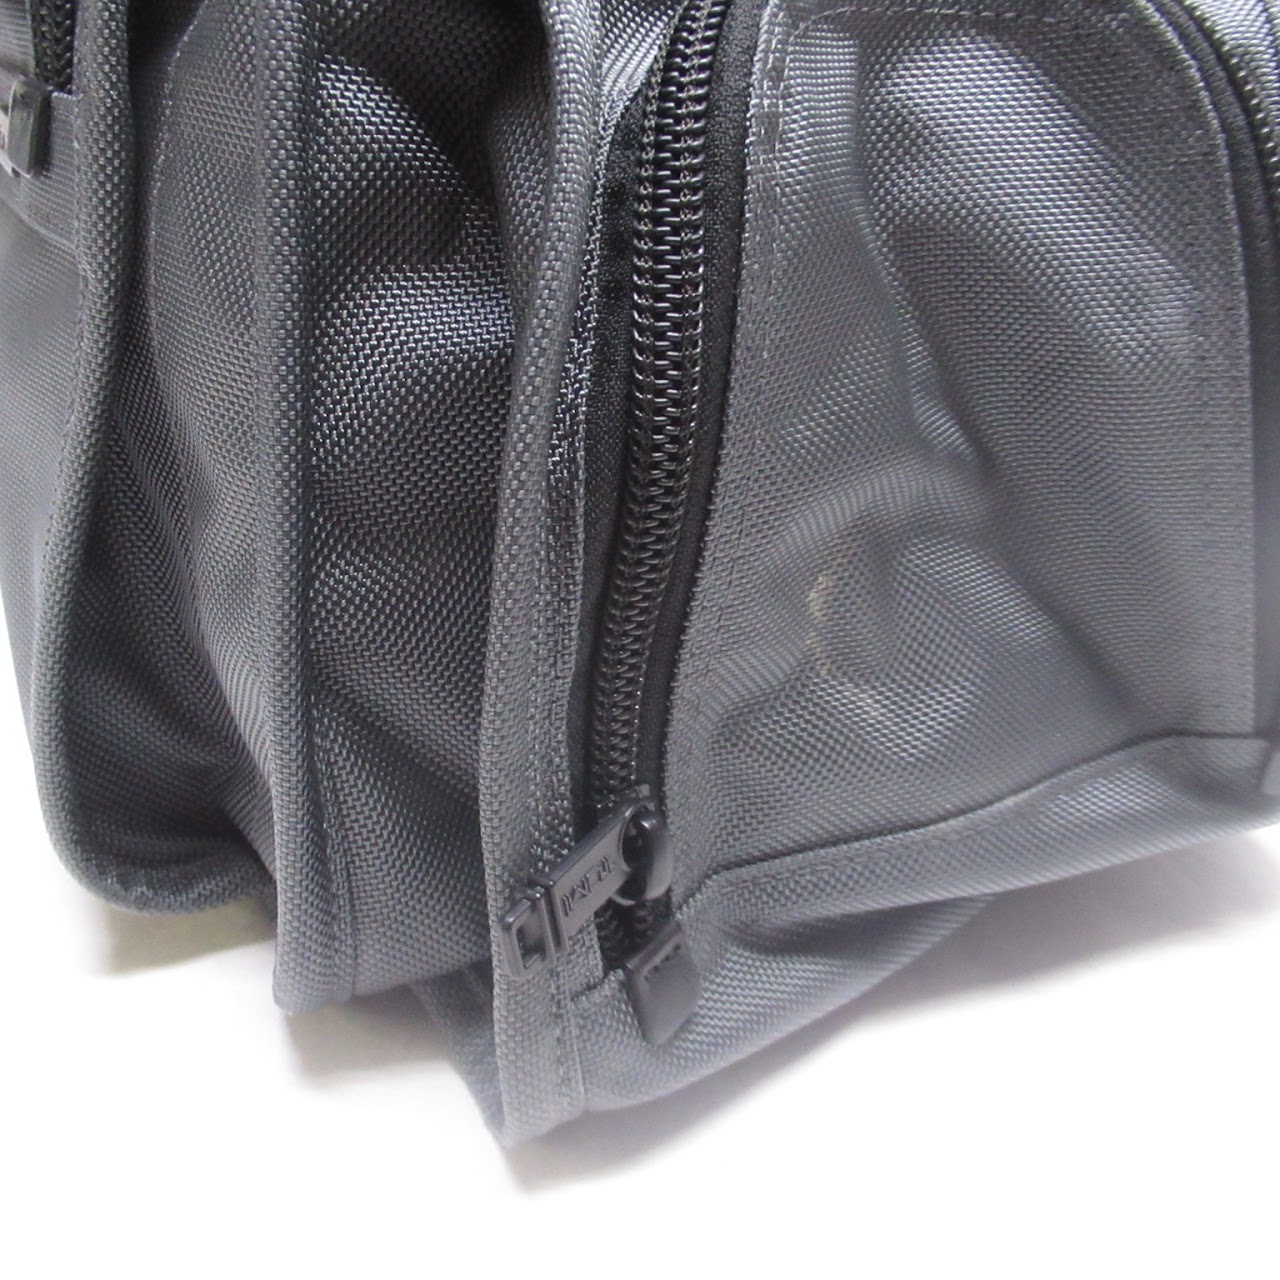 Tumi Ballistic Nylon Duffel Bag